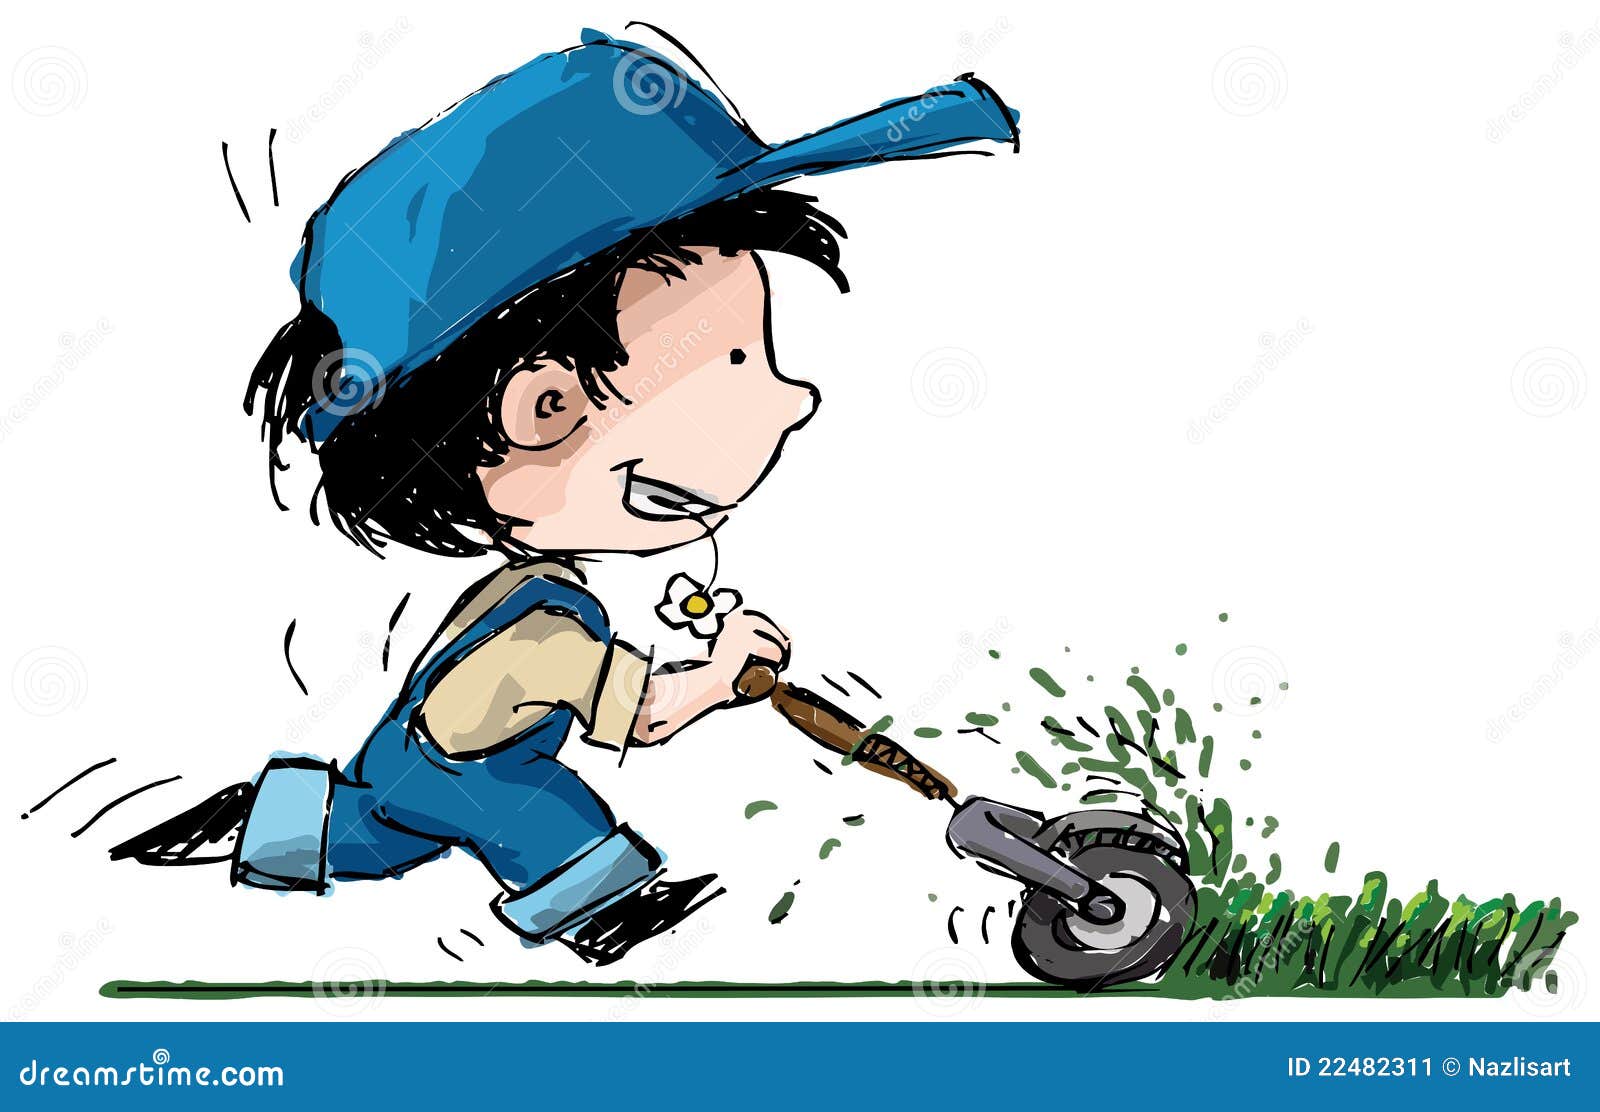 clipart of man cutting grass - photo #32